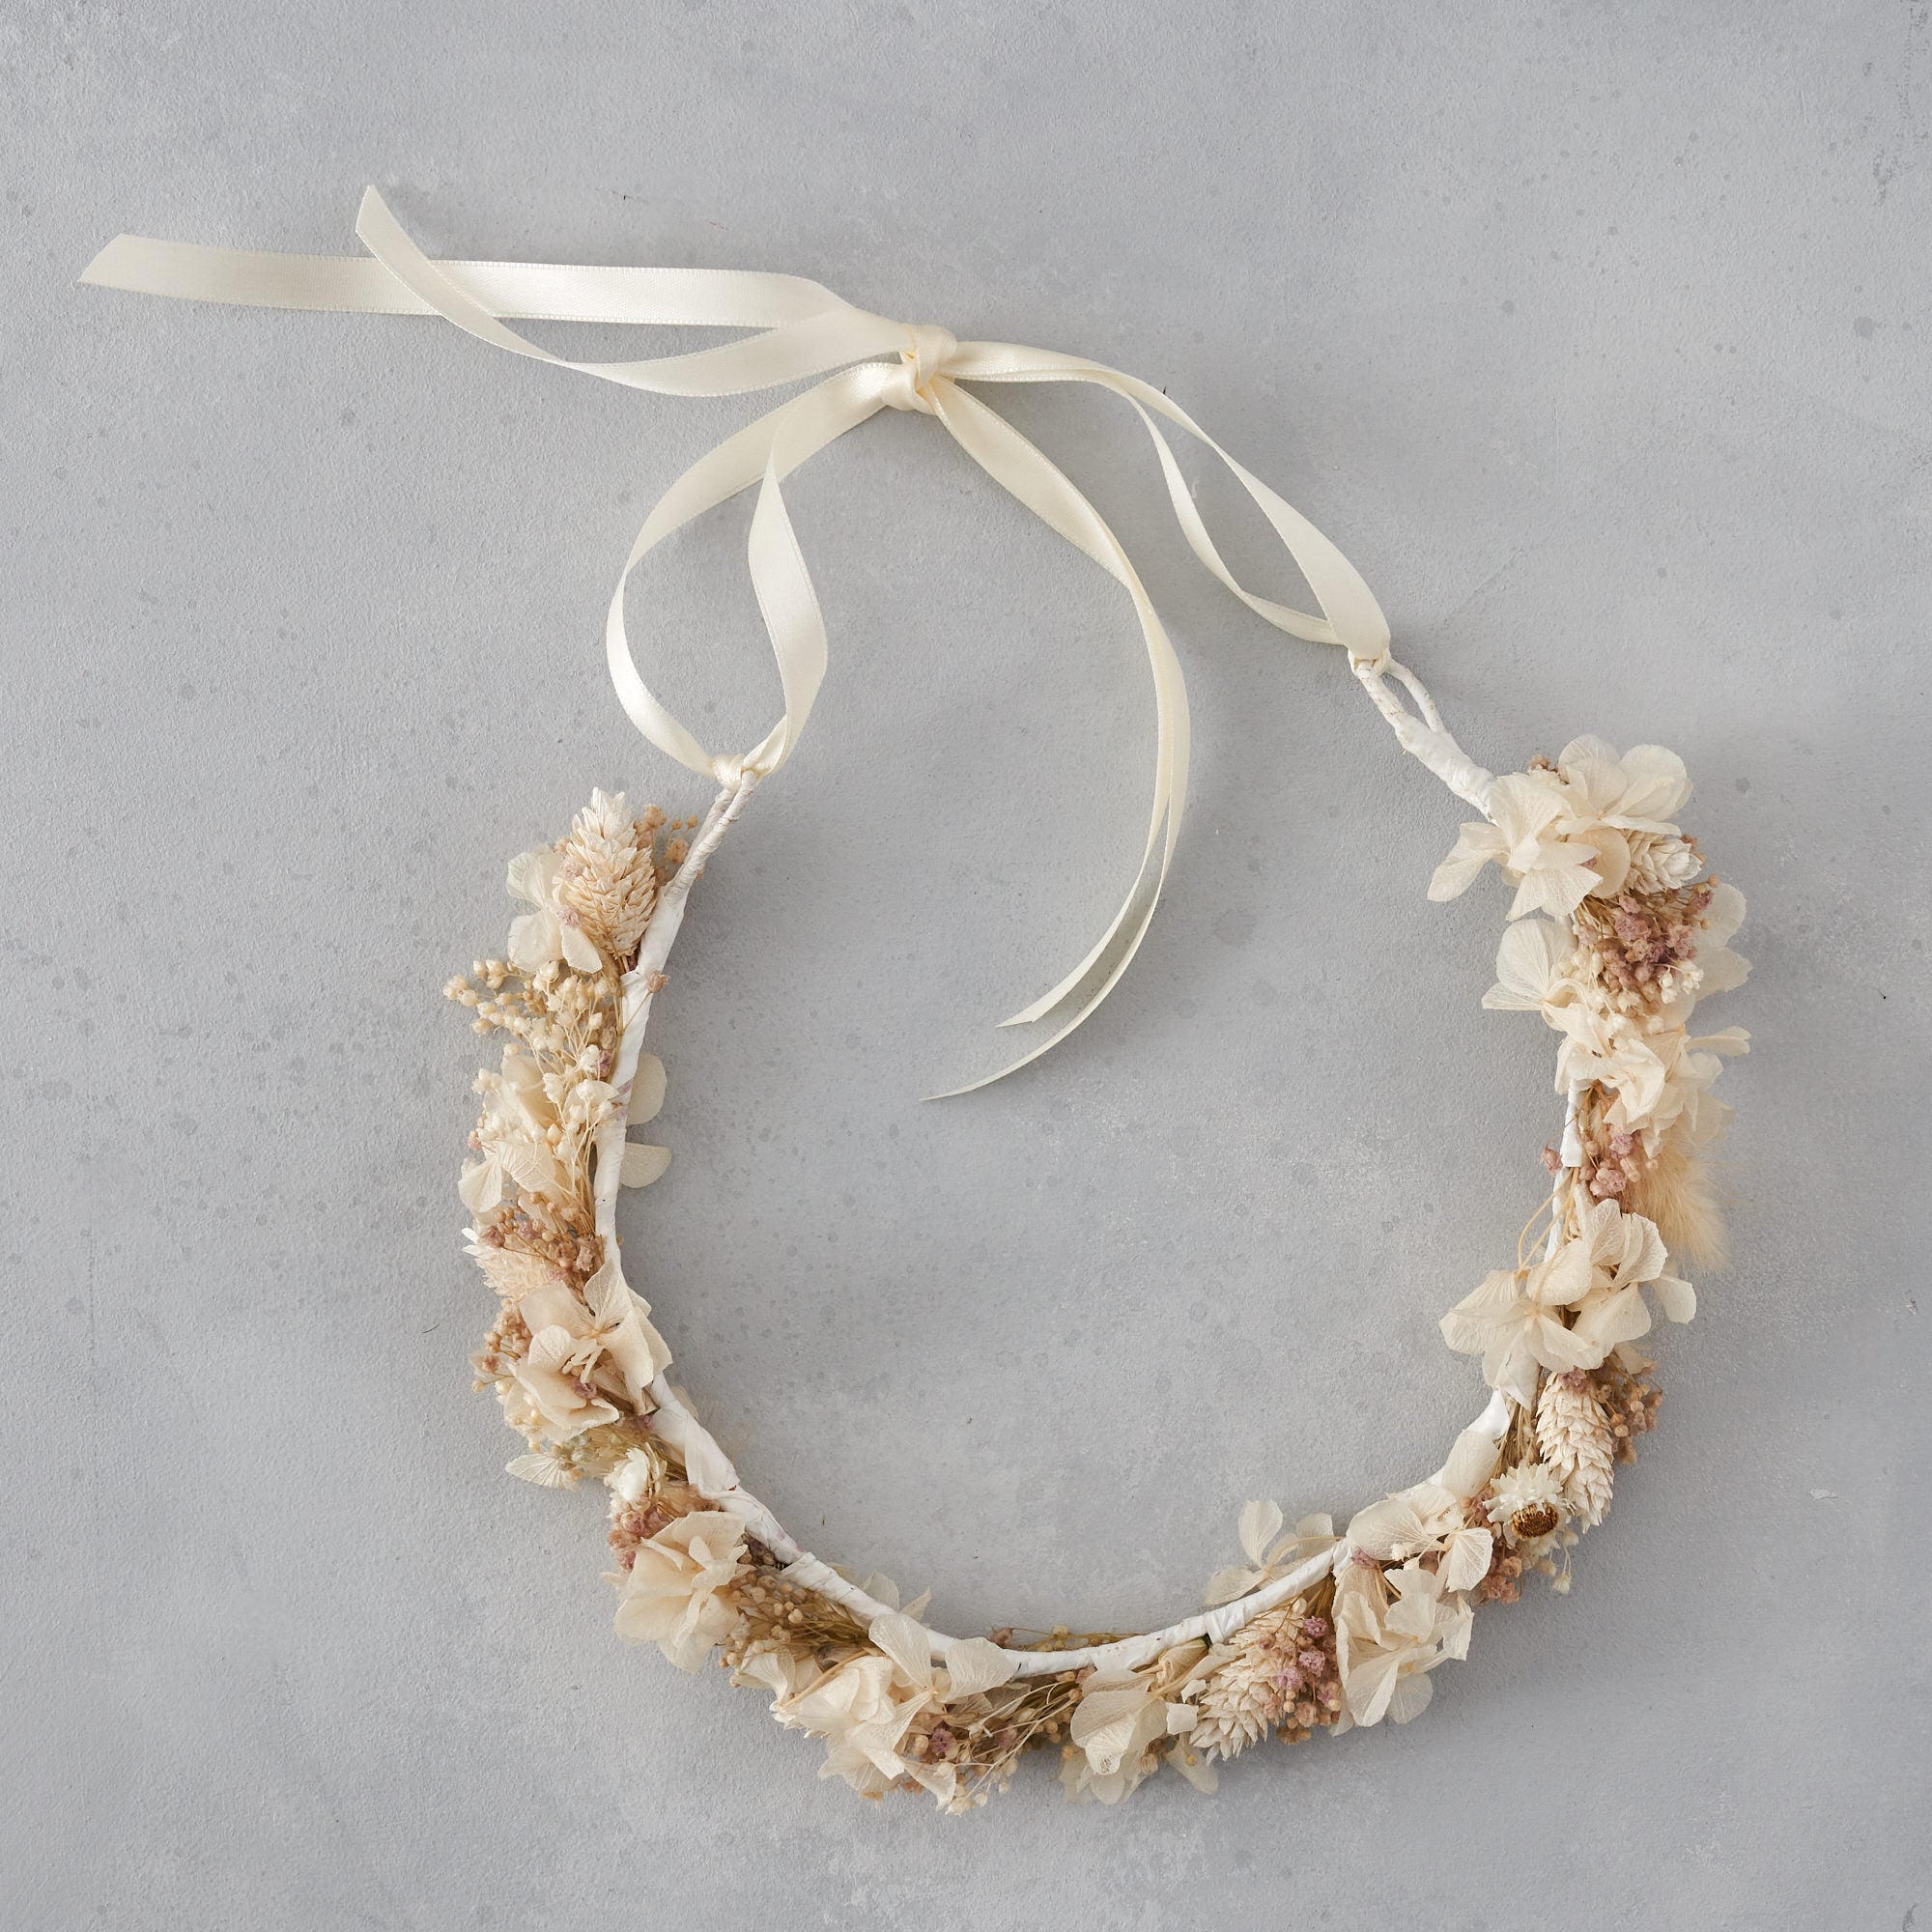 Dried flower crown : white